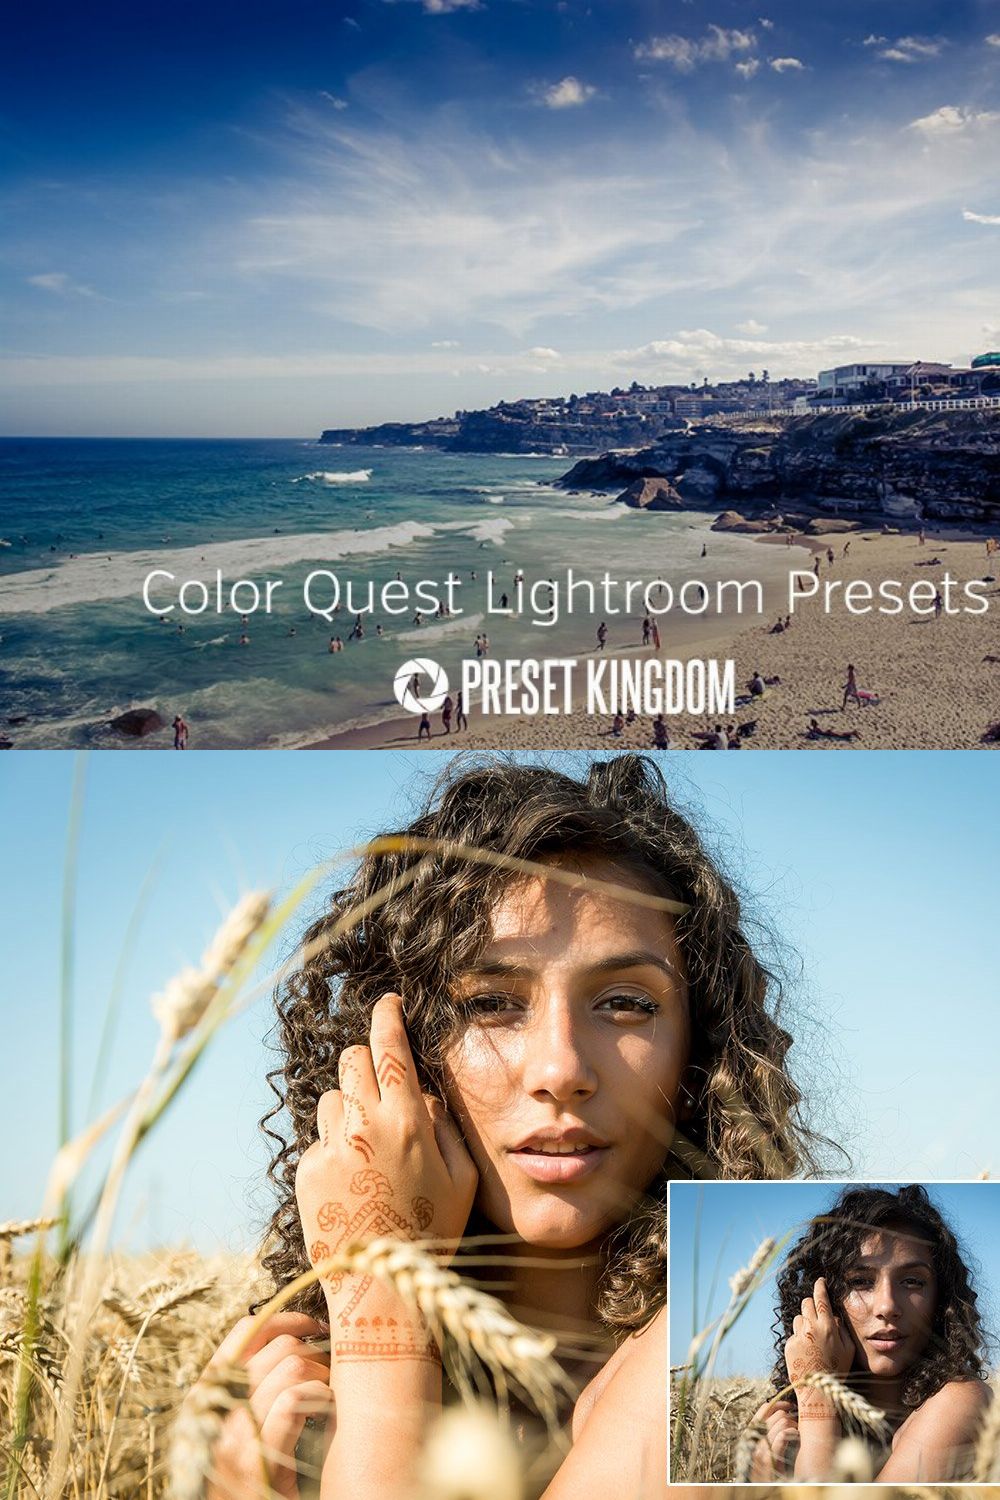 Color Quest Lightroom Presets pinterest preview image.